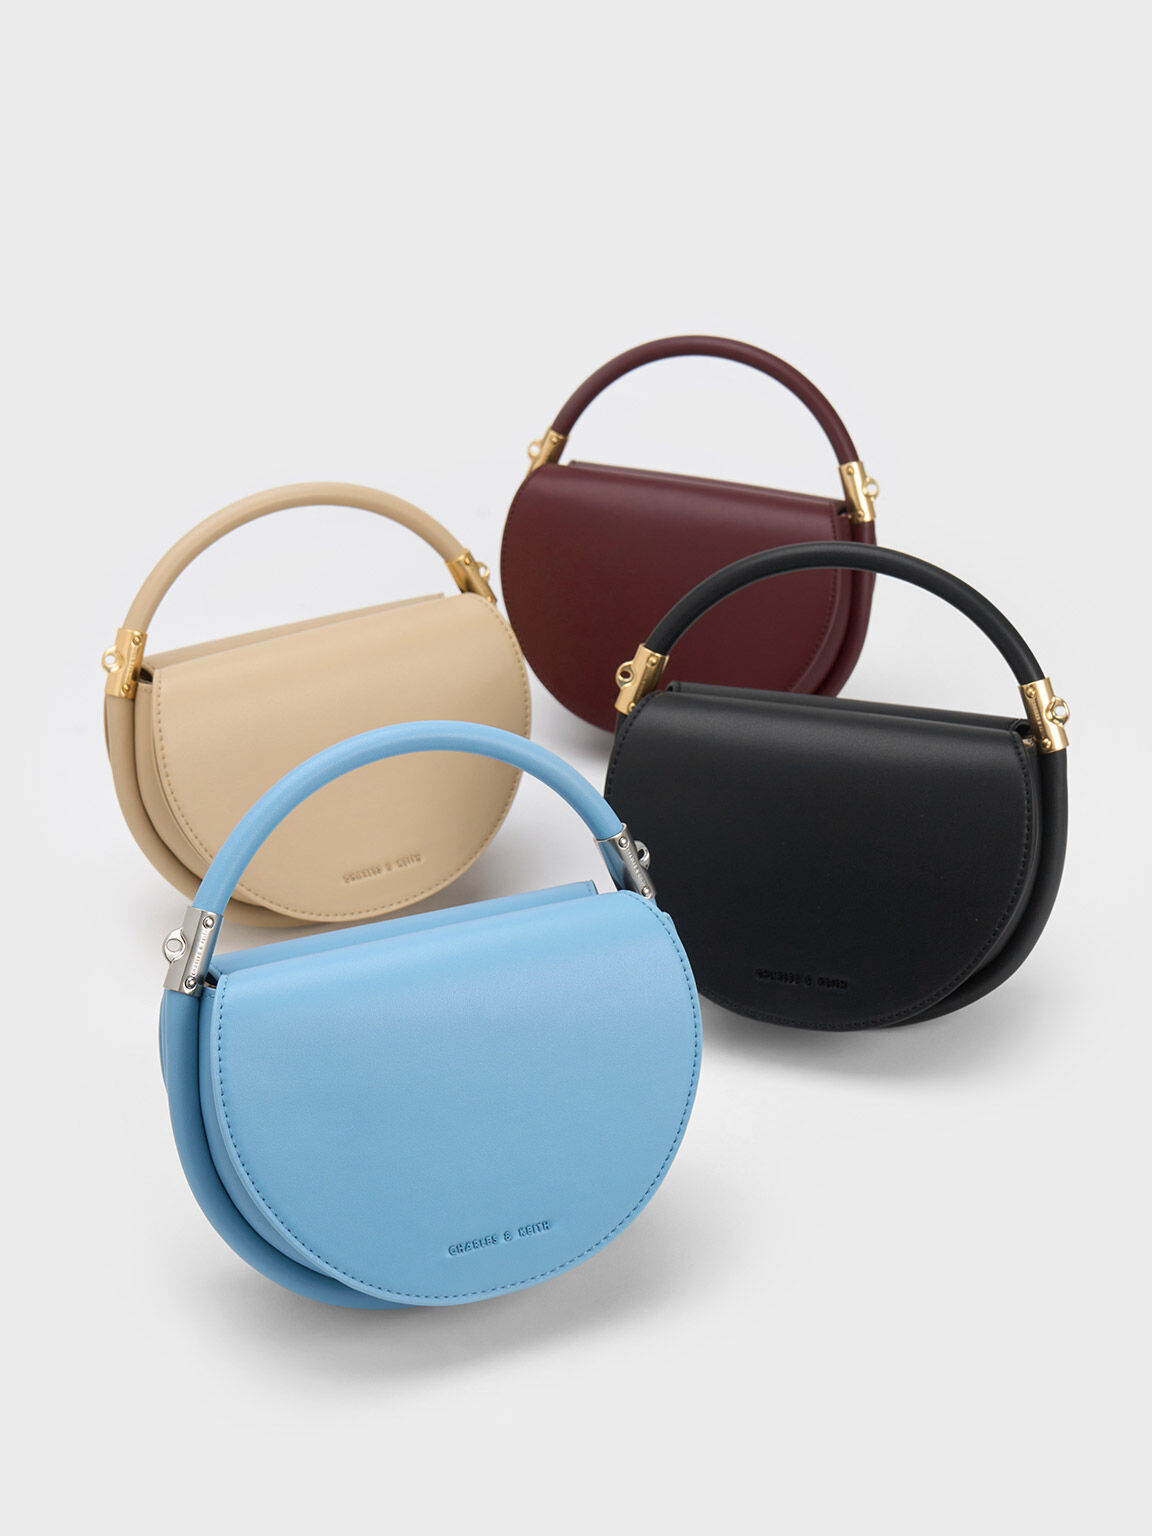 Buy CHARLES & KEITH Black Small Bucket Bag for Women Online @ Tata CLiQ  Luxury